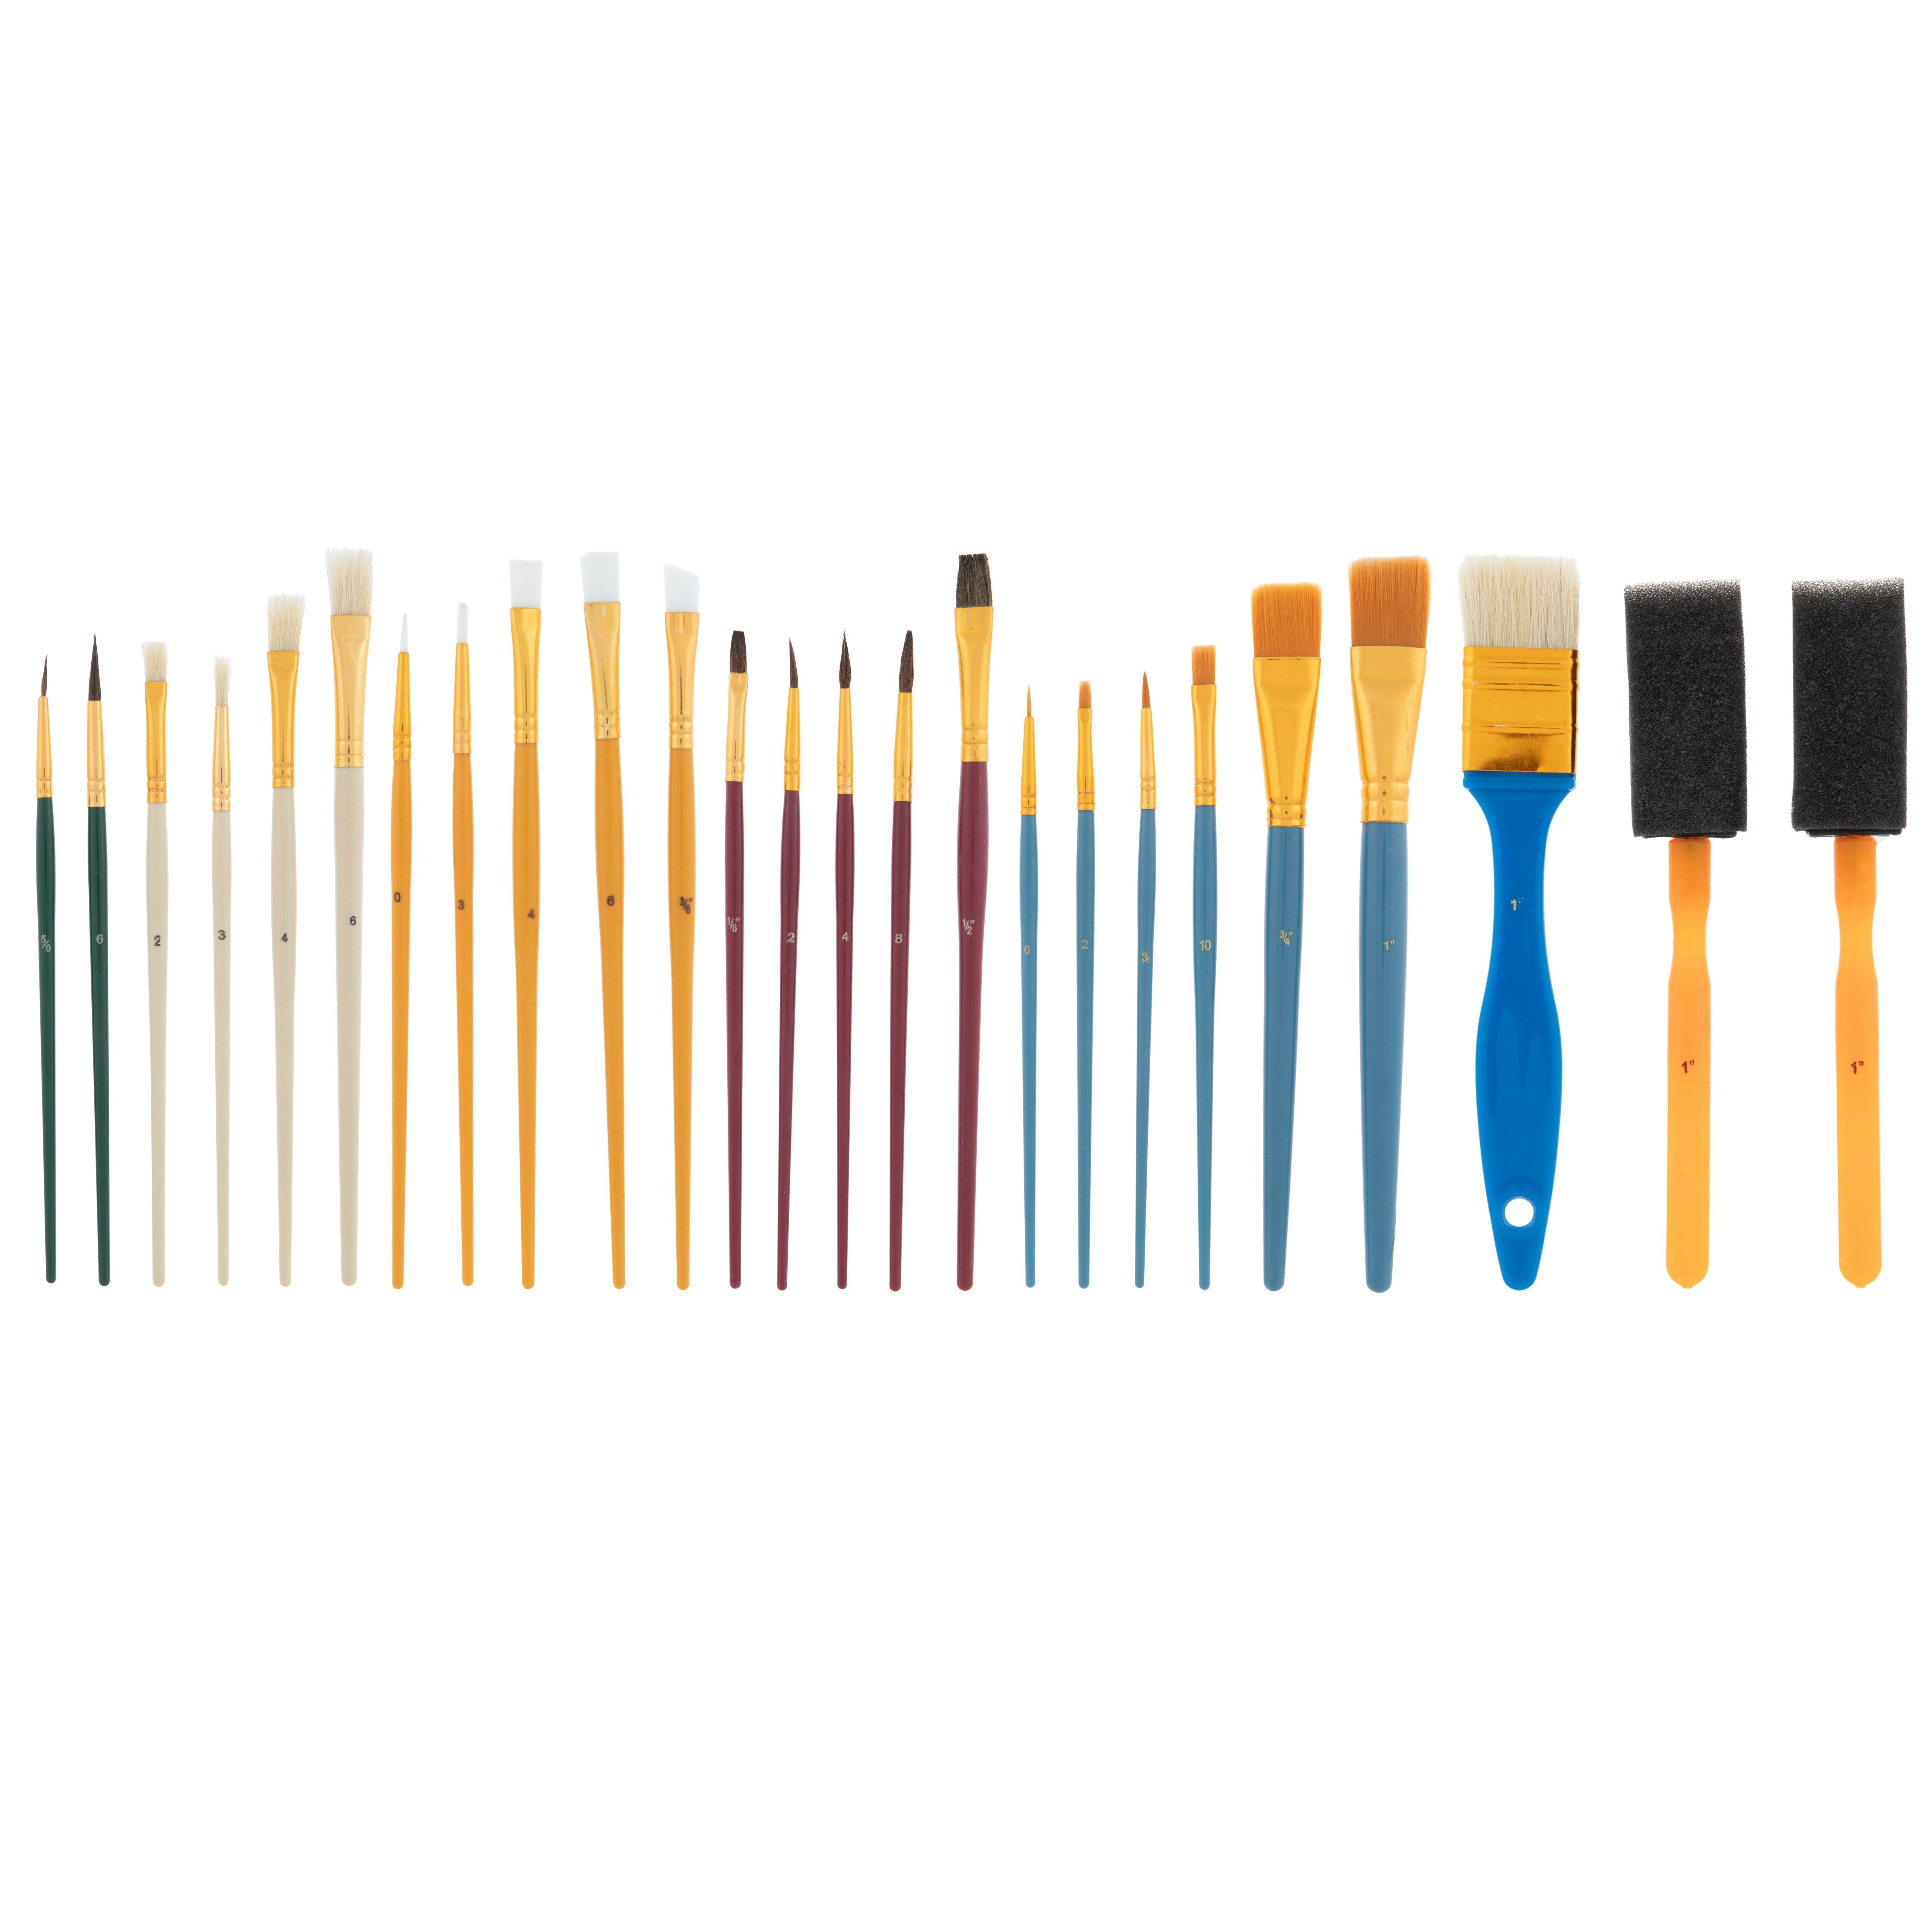 U.S. Art Supply 25-Piece All-Purpose Artist Paint Brush Set